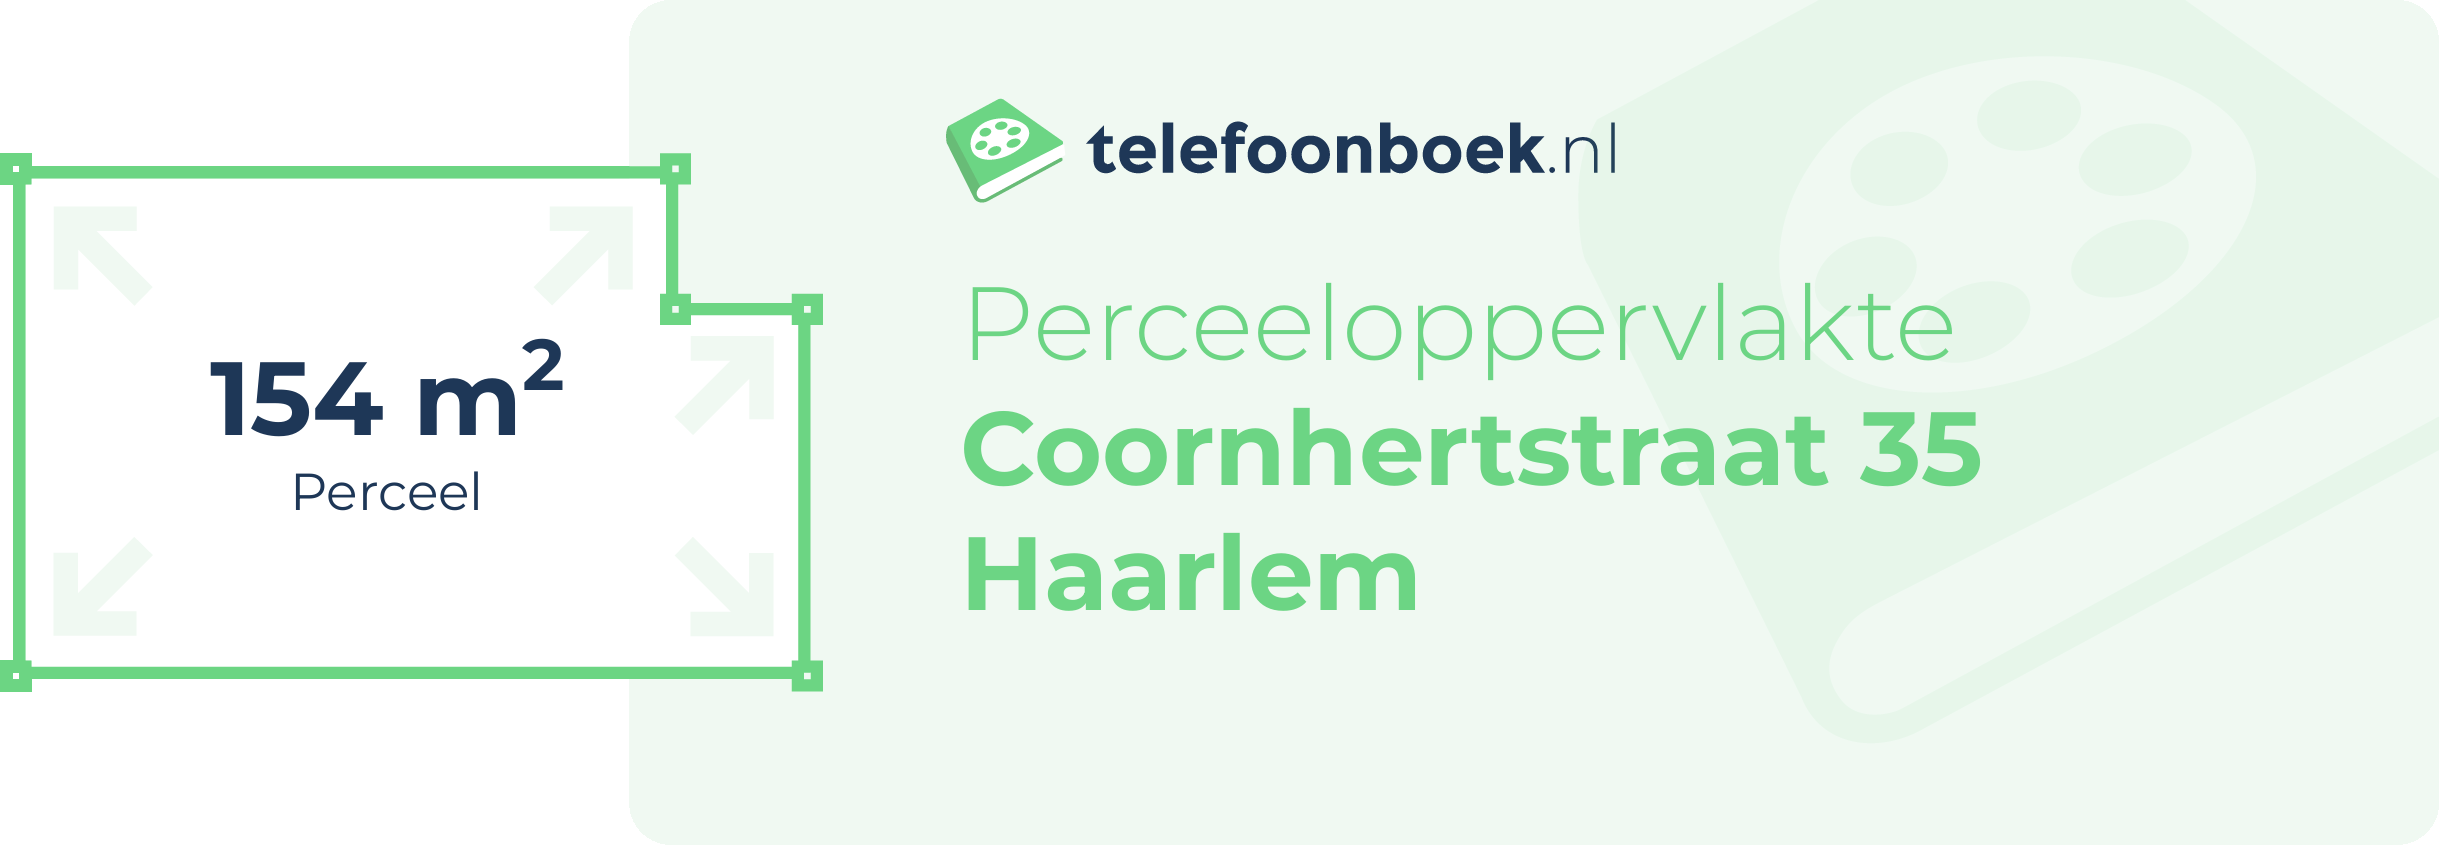 Perceeloppervlakte Coornhertstraat 35 Haarlem